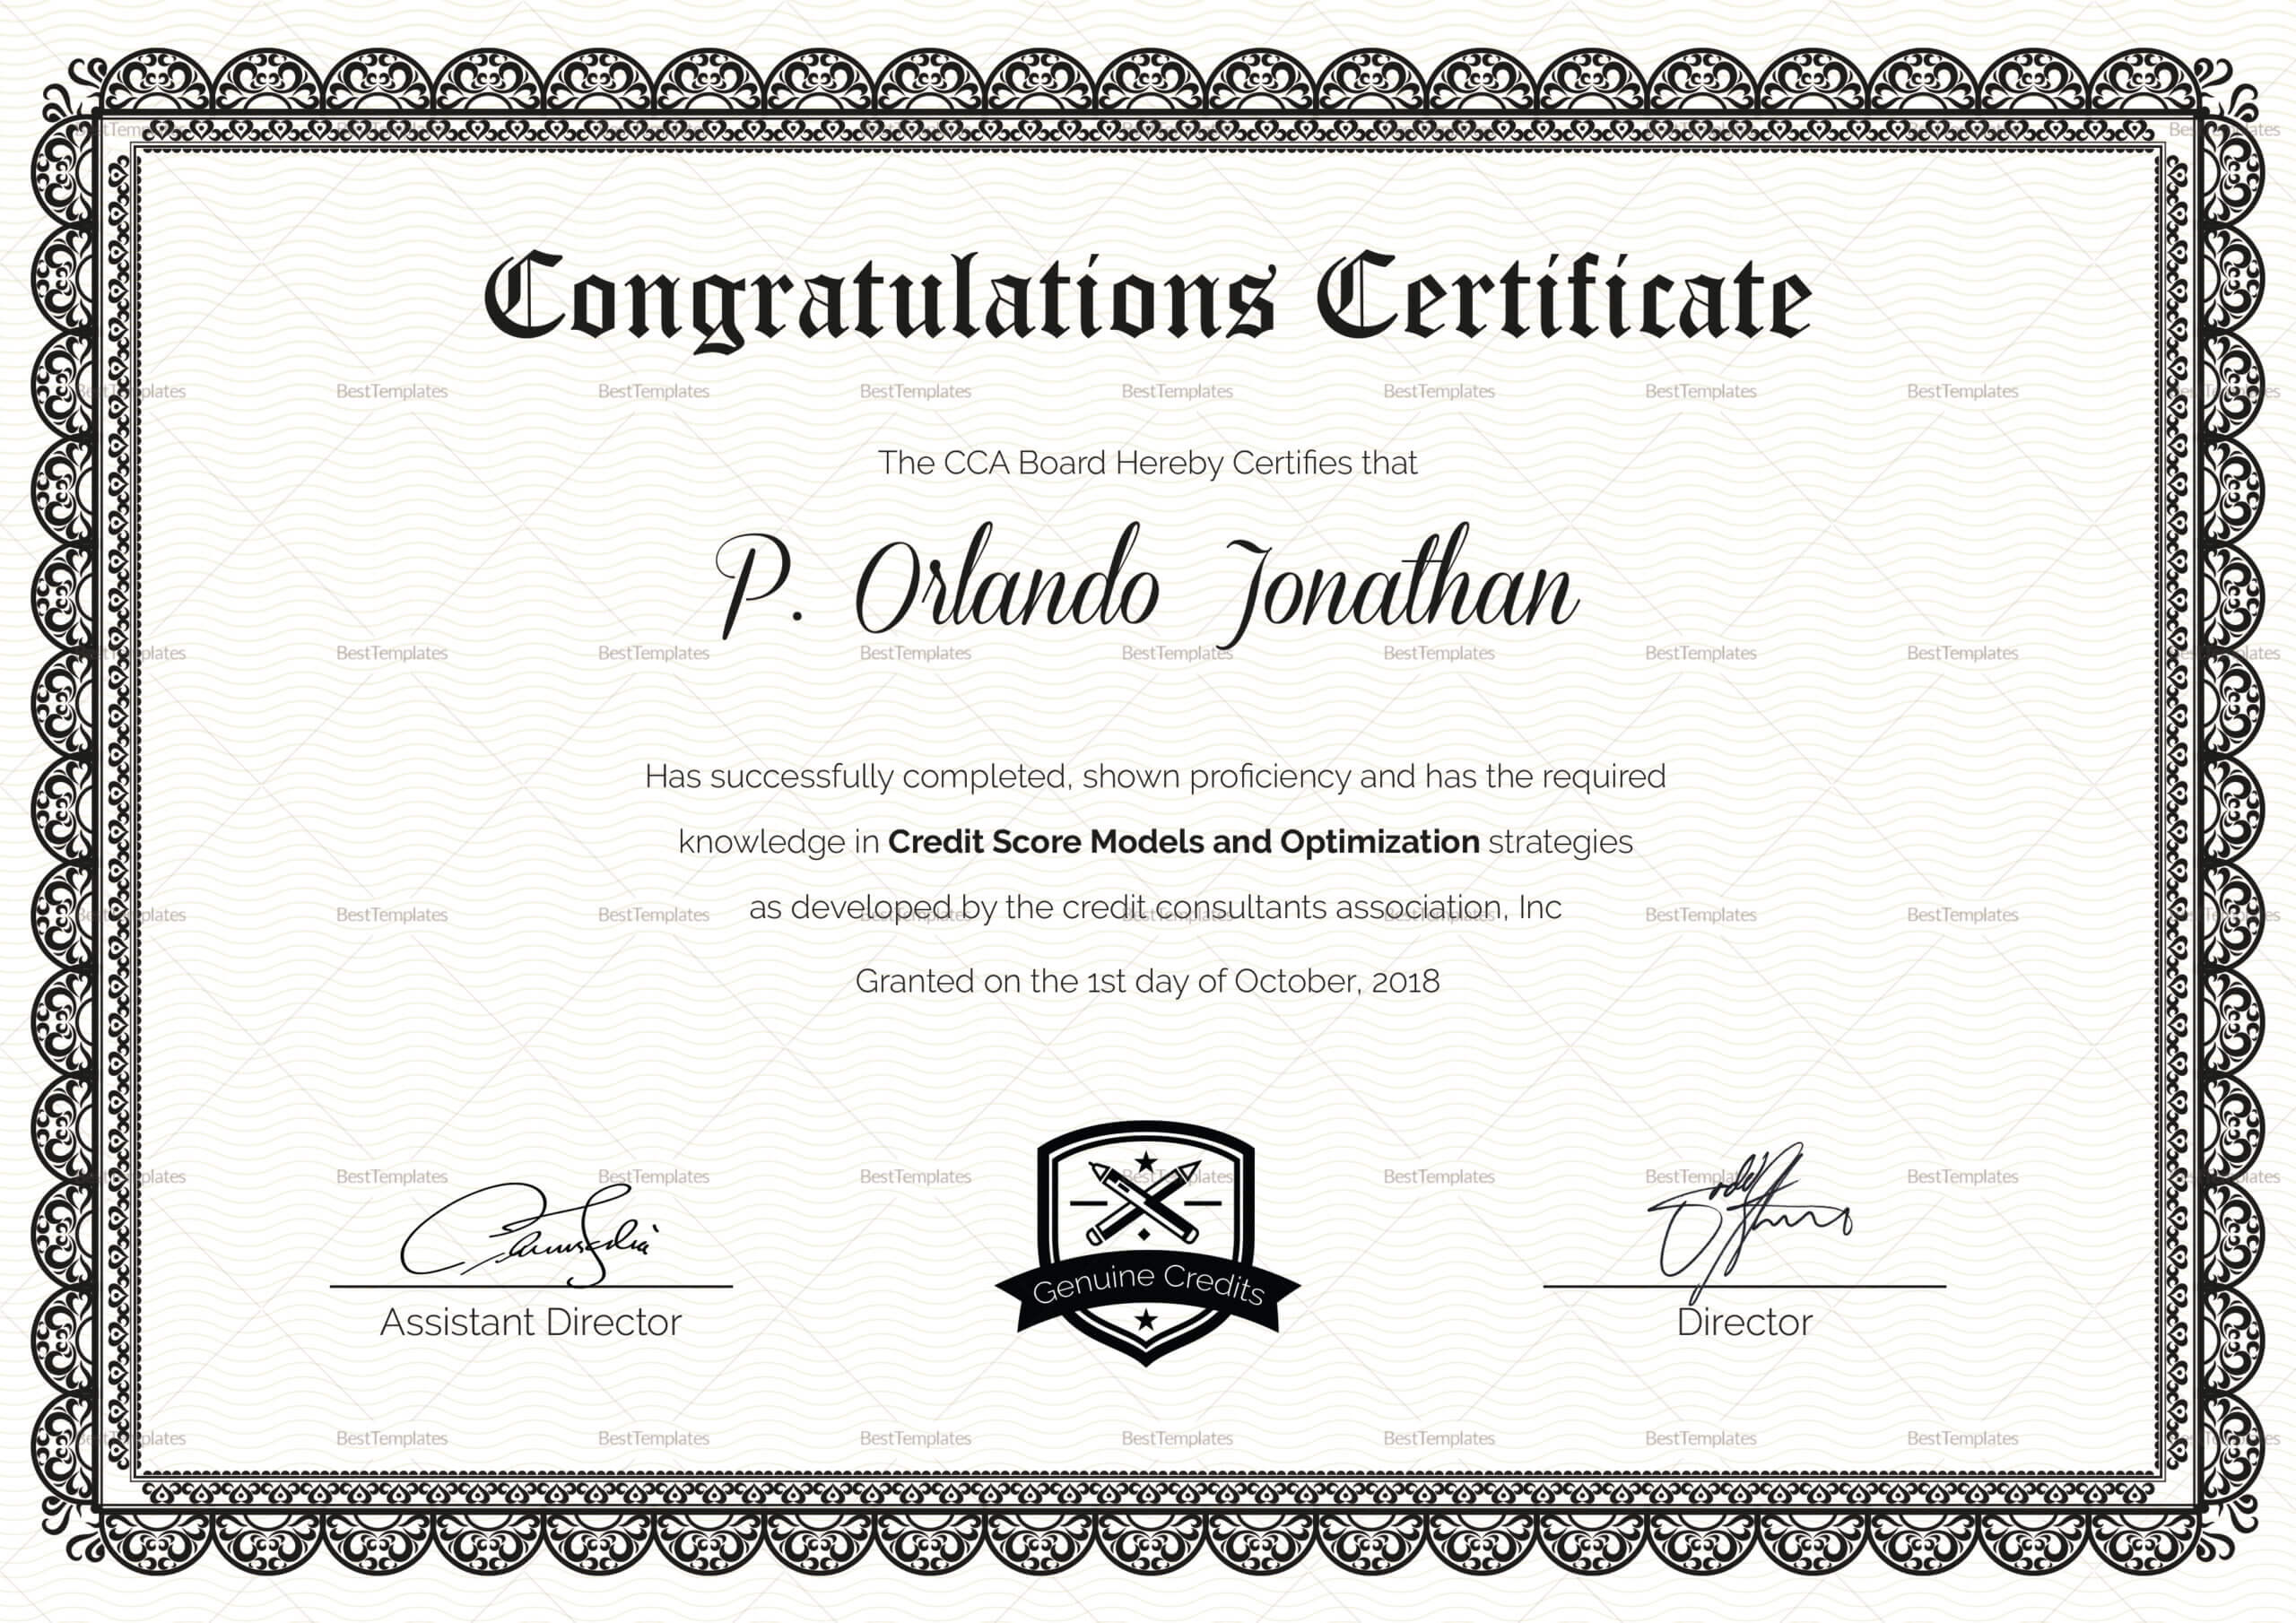 Congratulations Certificate Template Throughout Congratulations Certificate Word Template